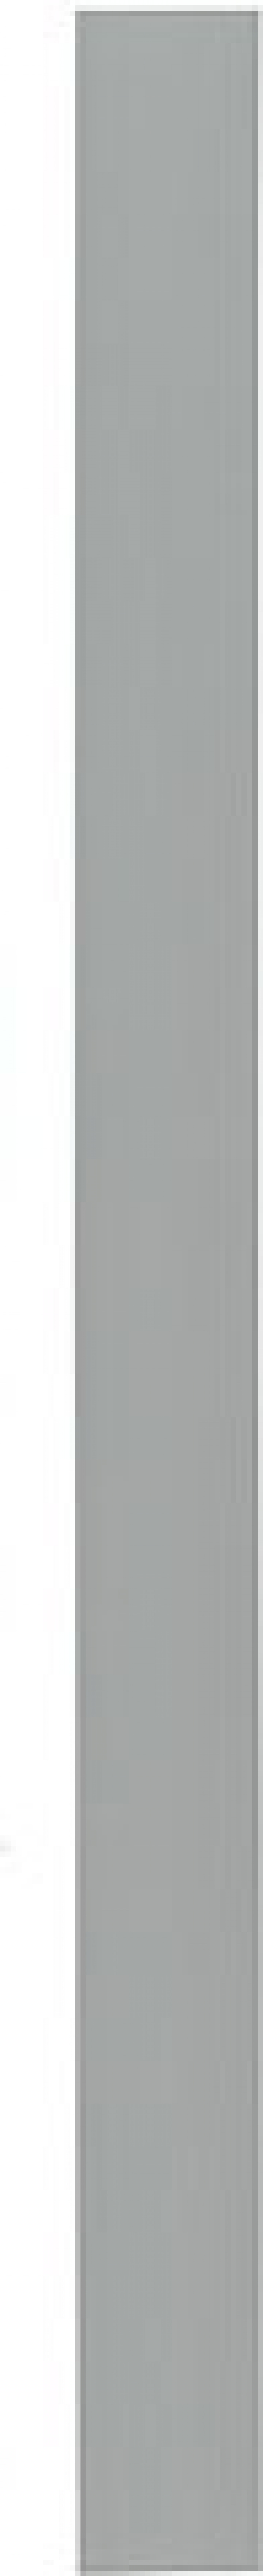 Listefylling 12 mm grå, 20 meter